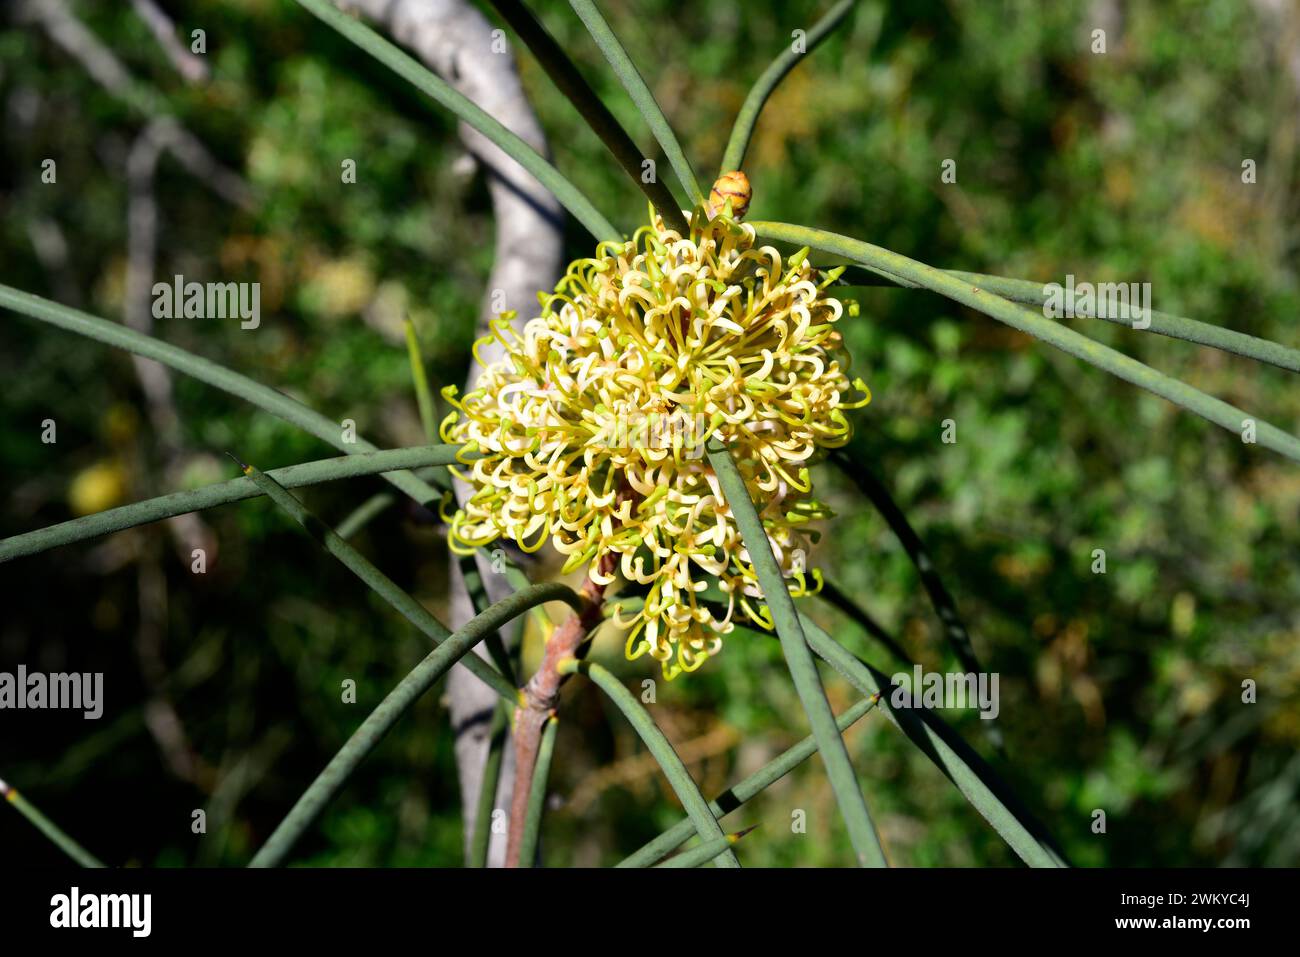 Jarnockmert (Hakea recurva) is a shrub or small tree native to western Australia. Inflorescence and leaves detail. Stock Photo